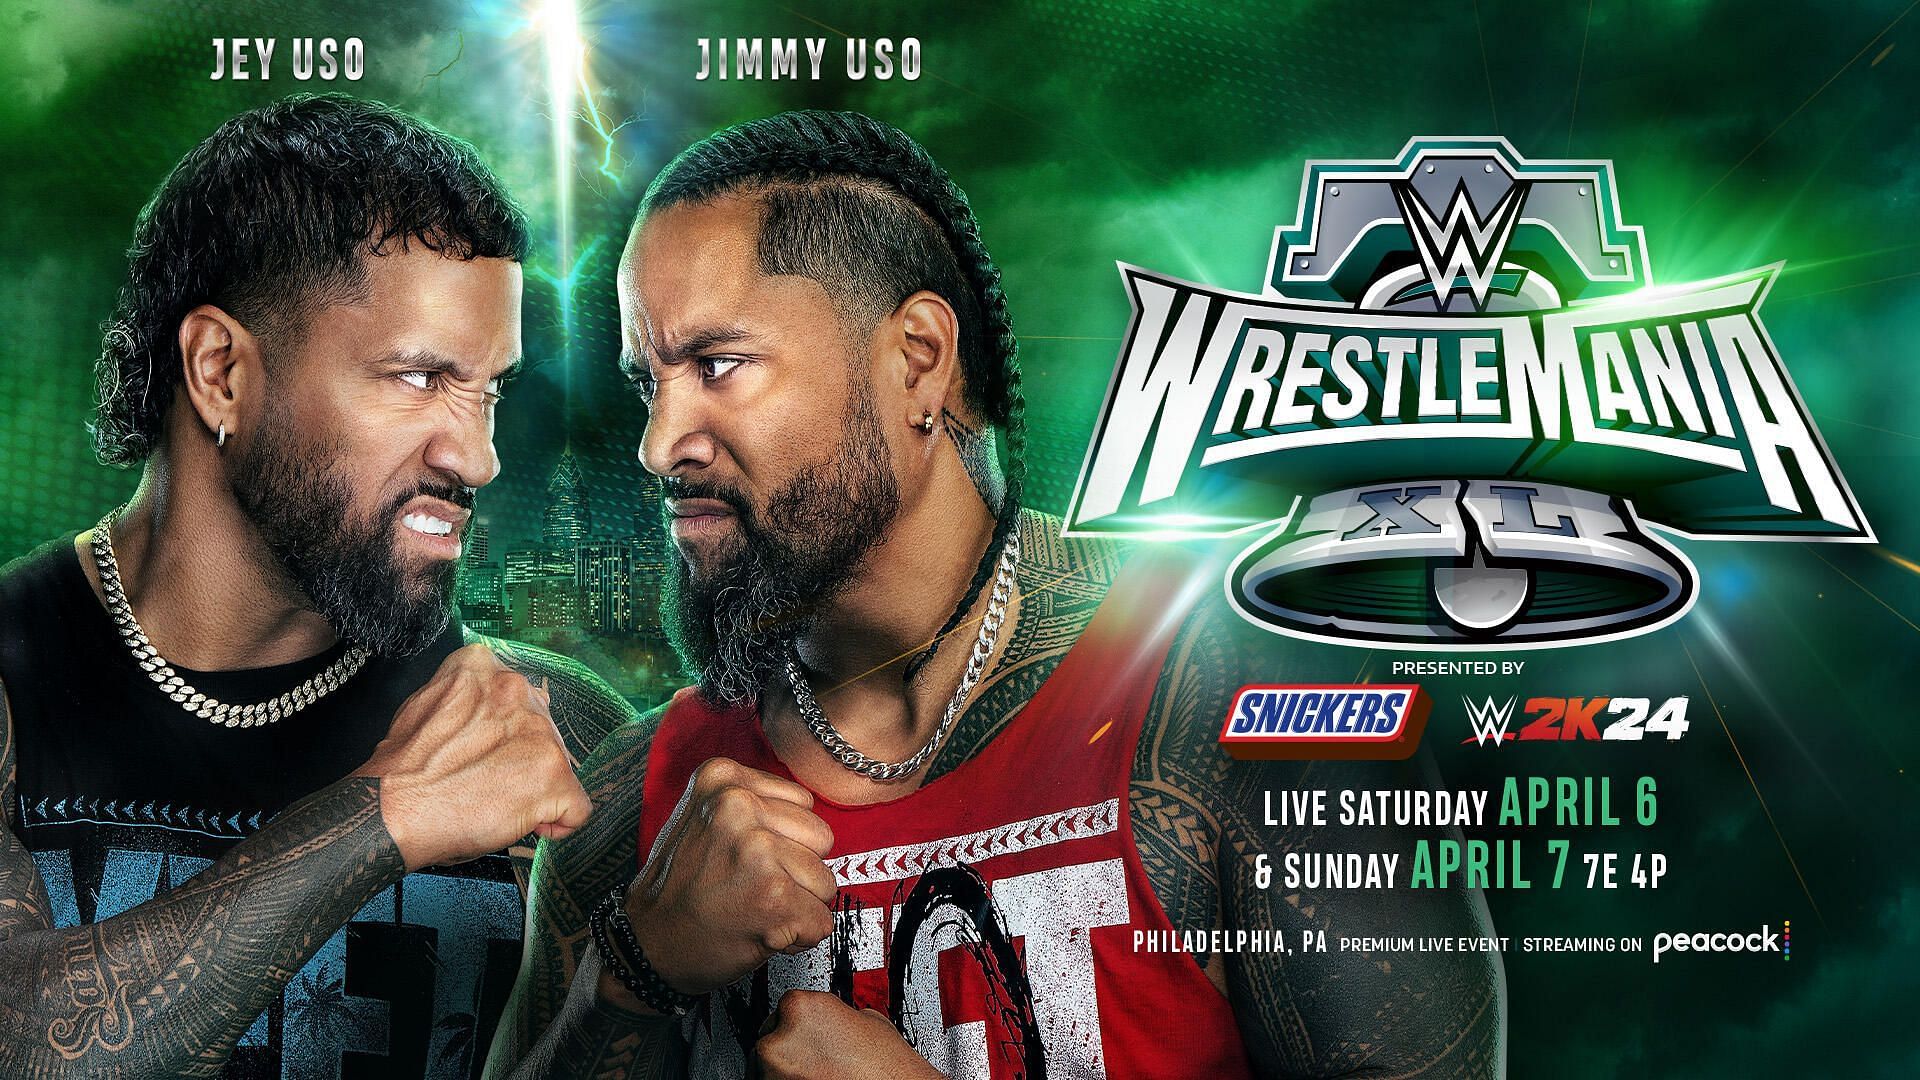 Jimmy and Jey will finally lock horns at WrestleMania XL (Image credits: WWE.com)